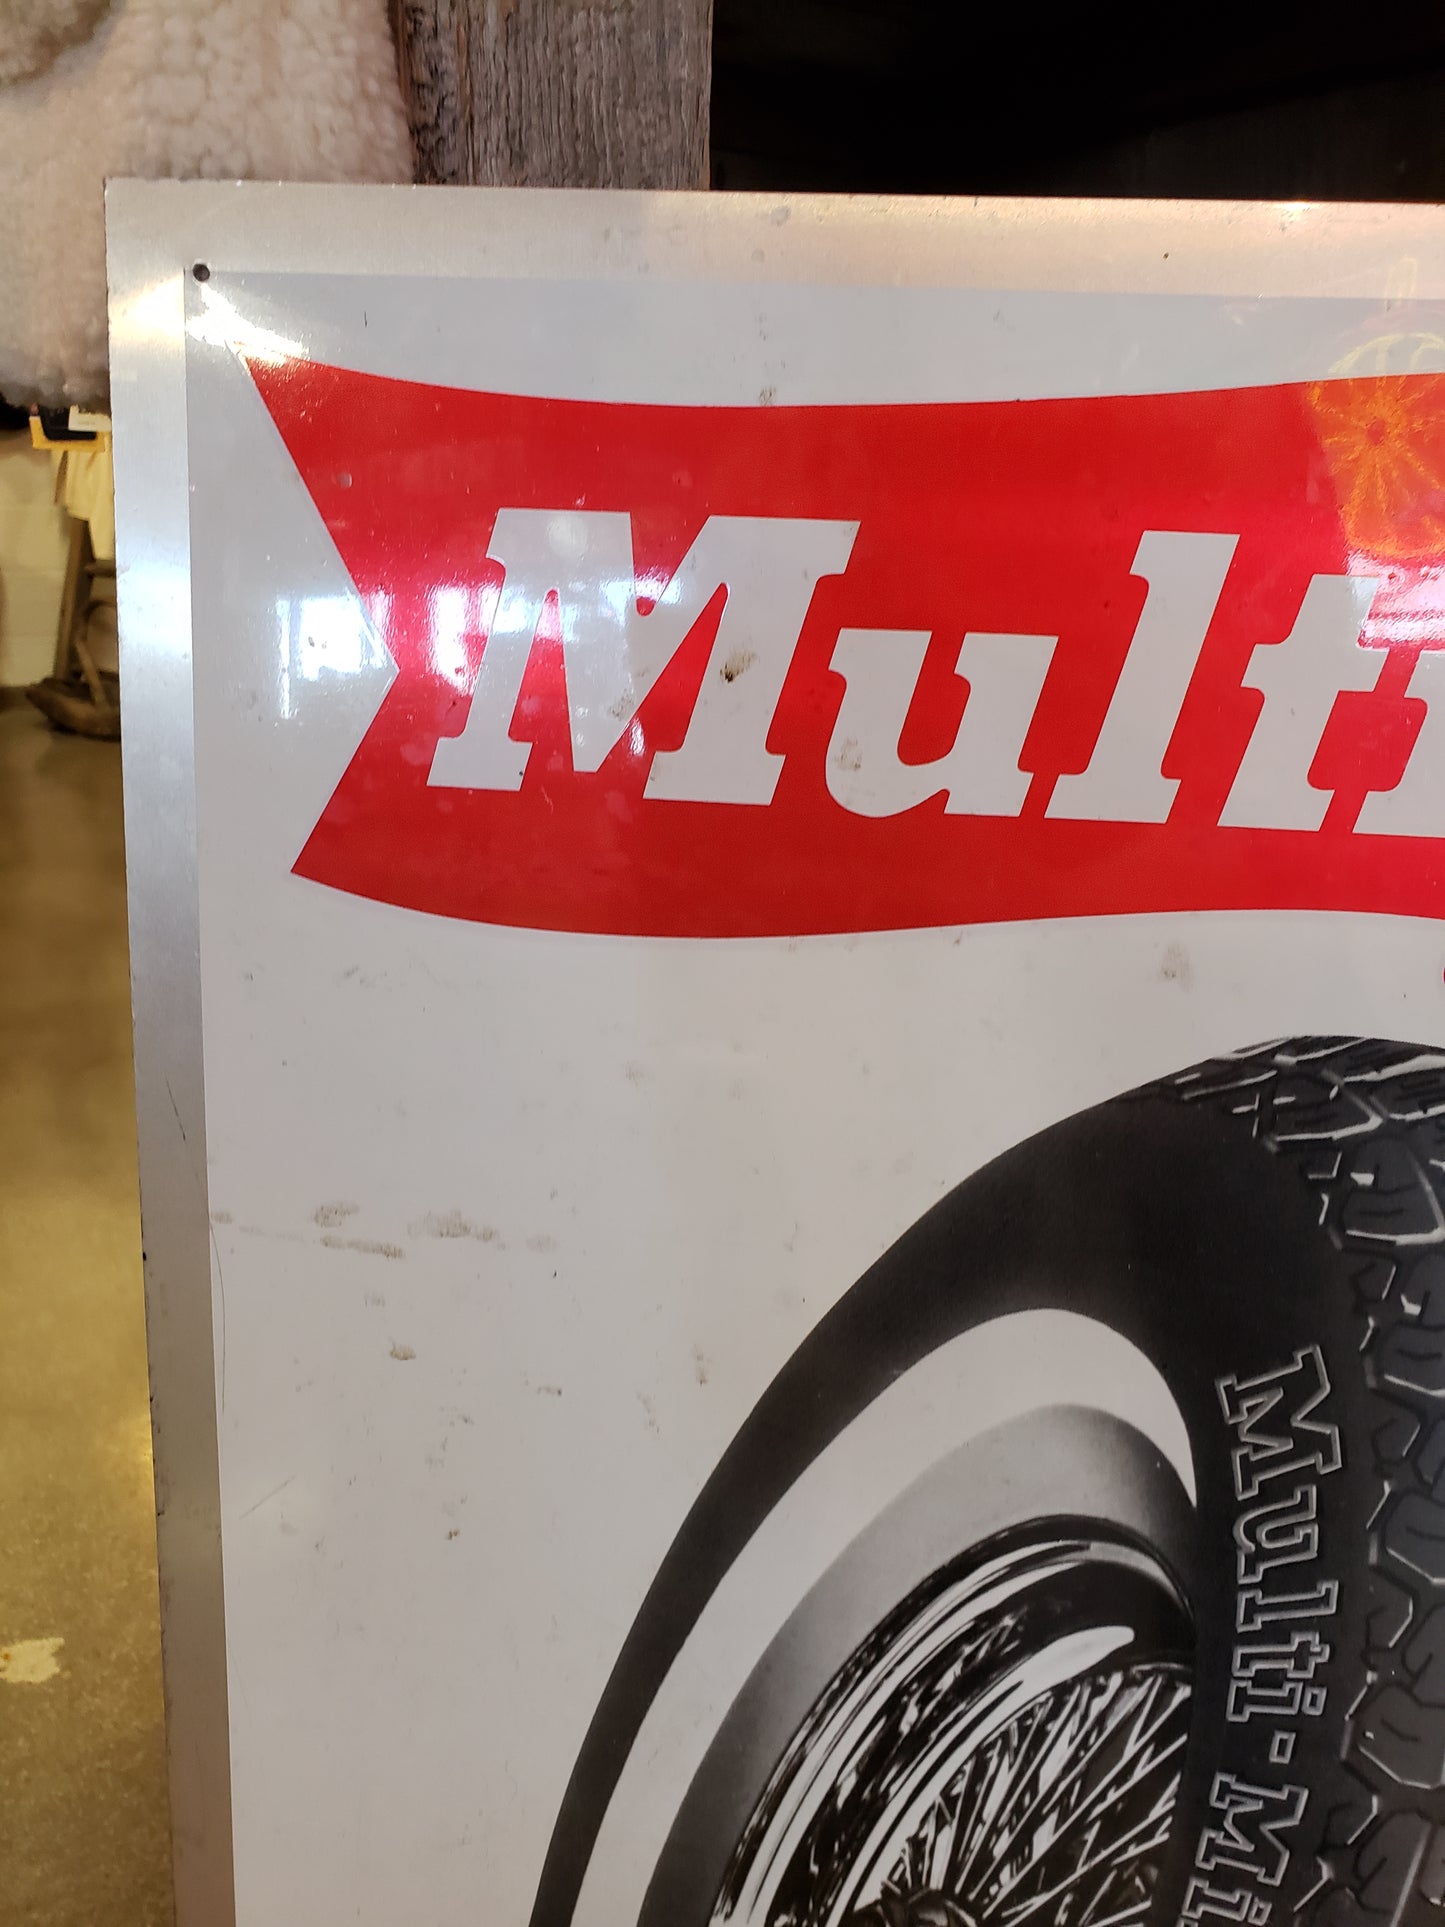 Multi-Mile Tires sign